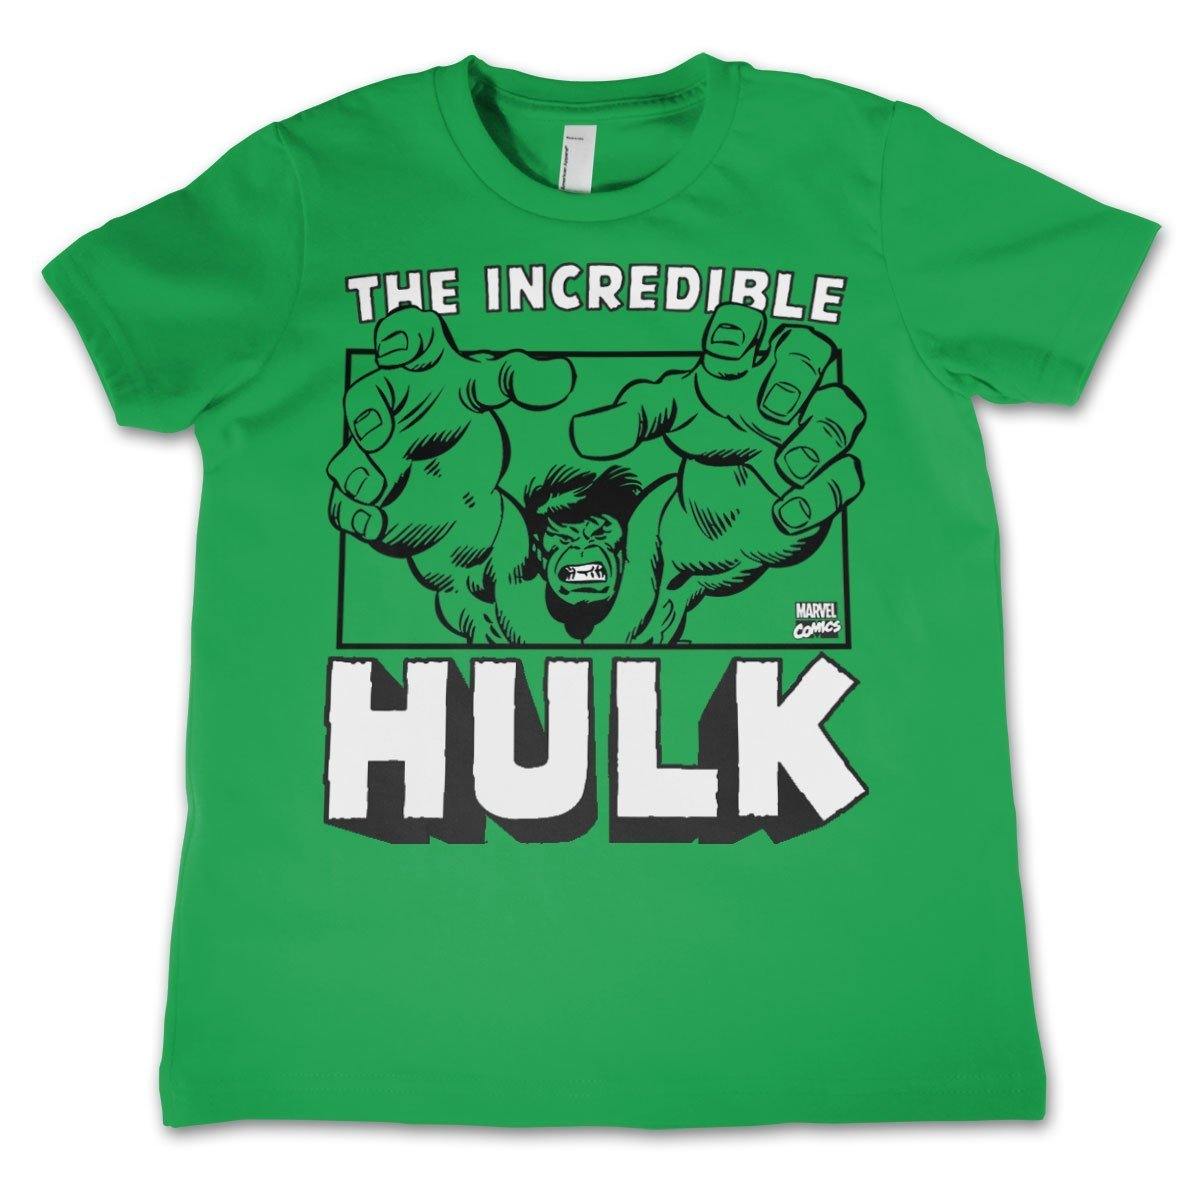 The incredible hulk Marvel kids t-shirt –